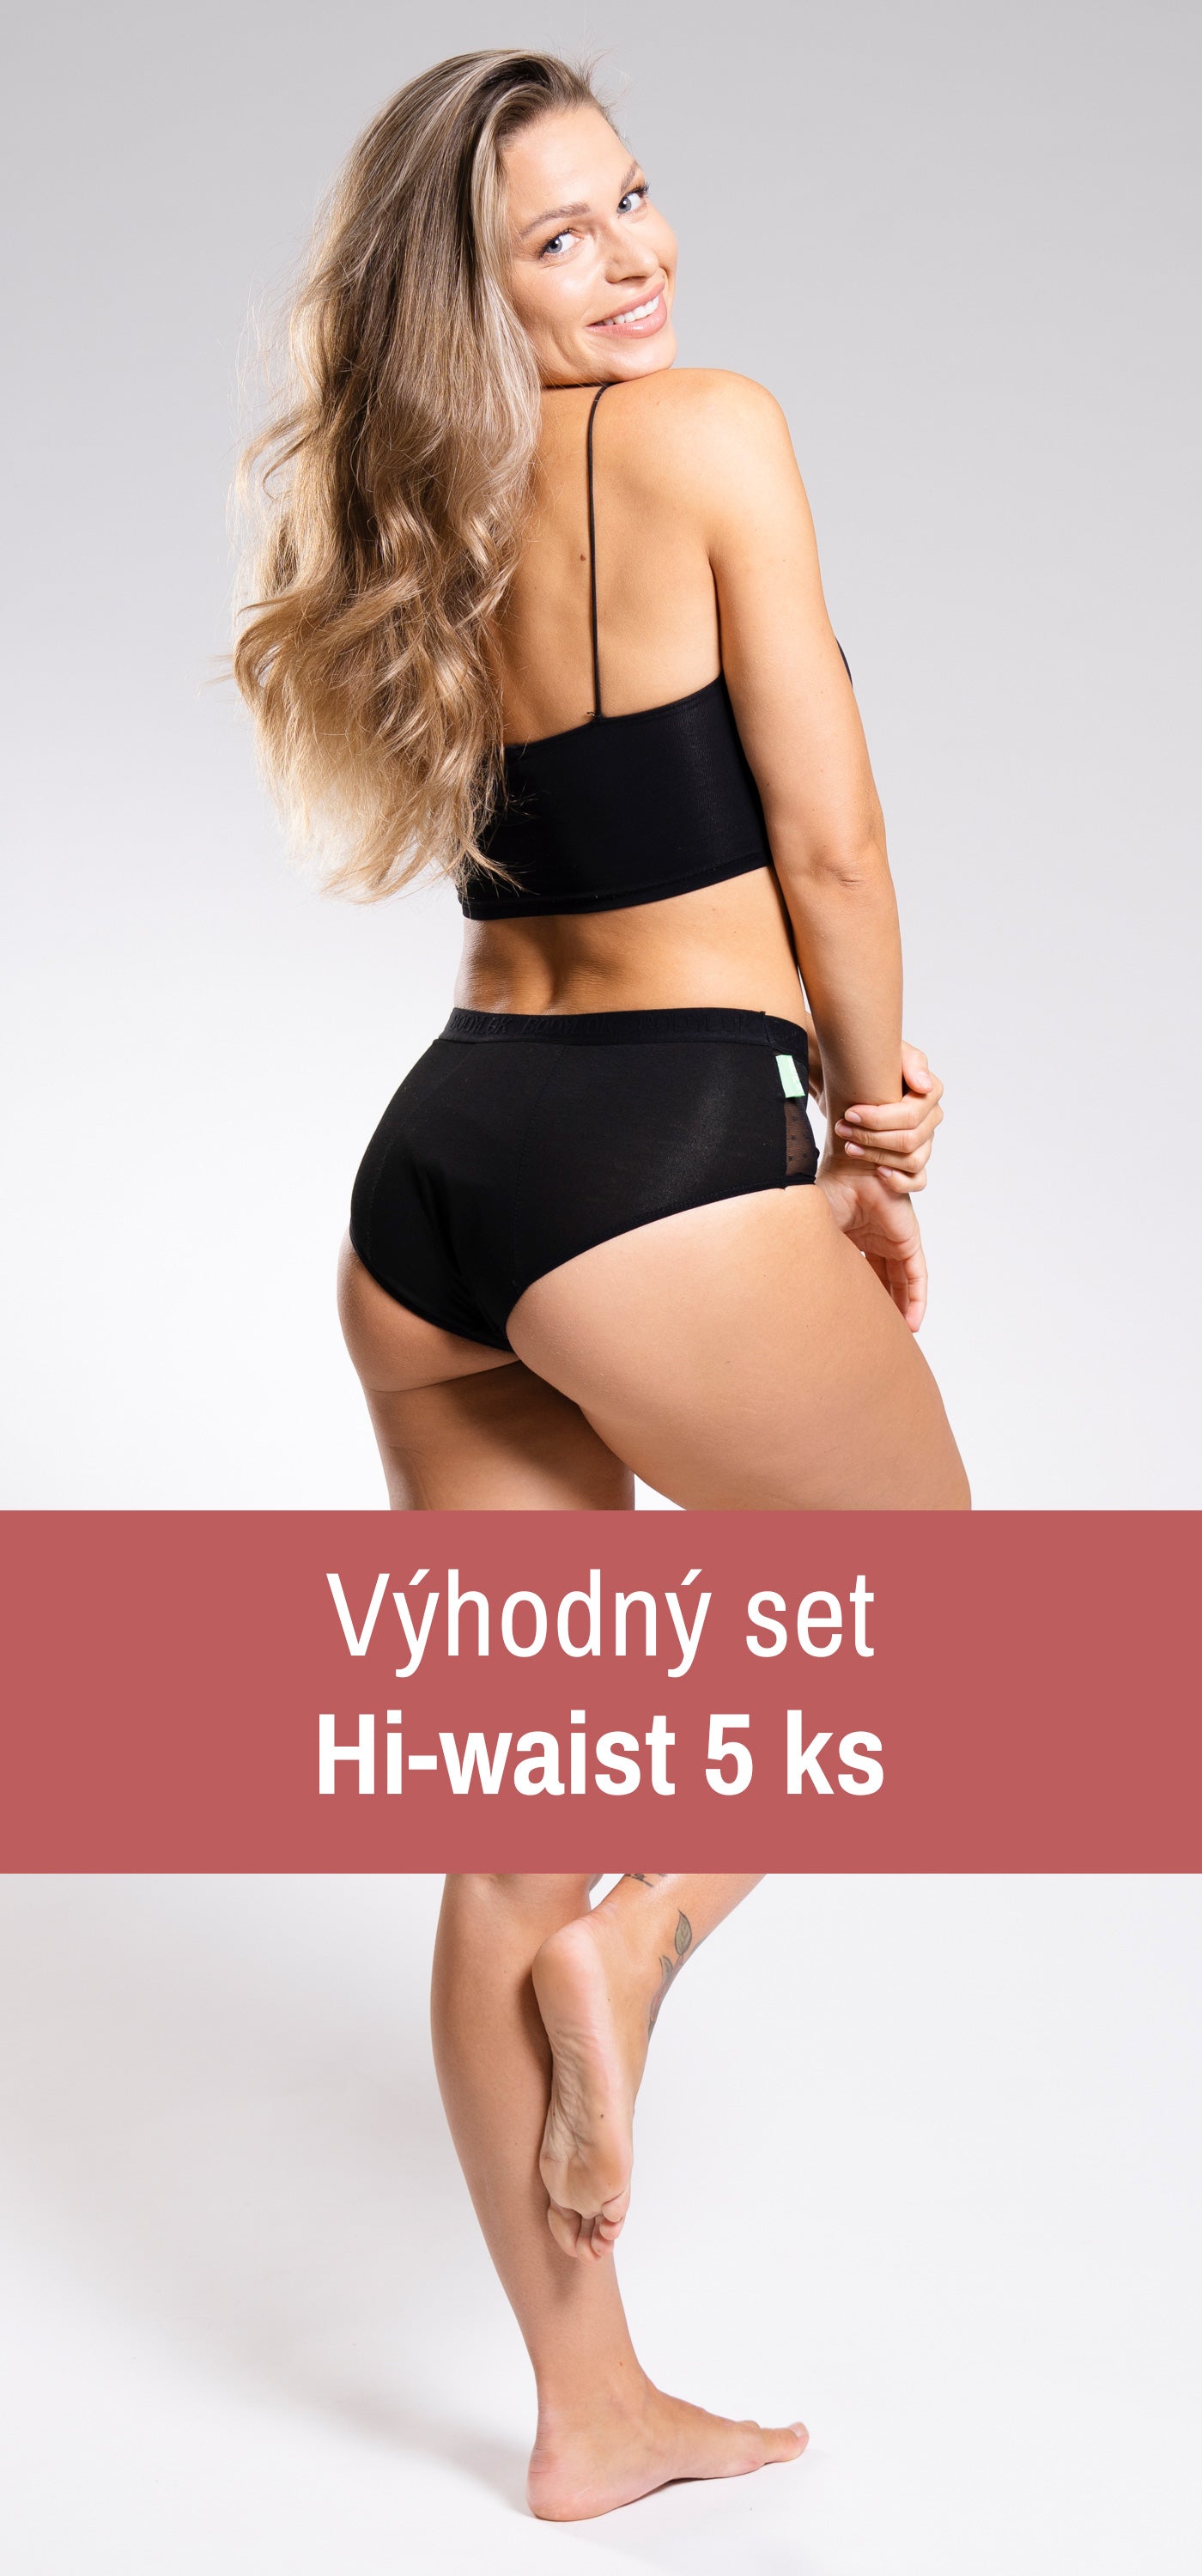 Hi-waist 5 pcs - 399 CZK